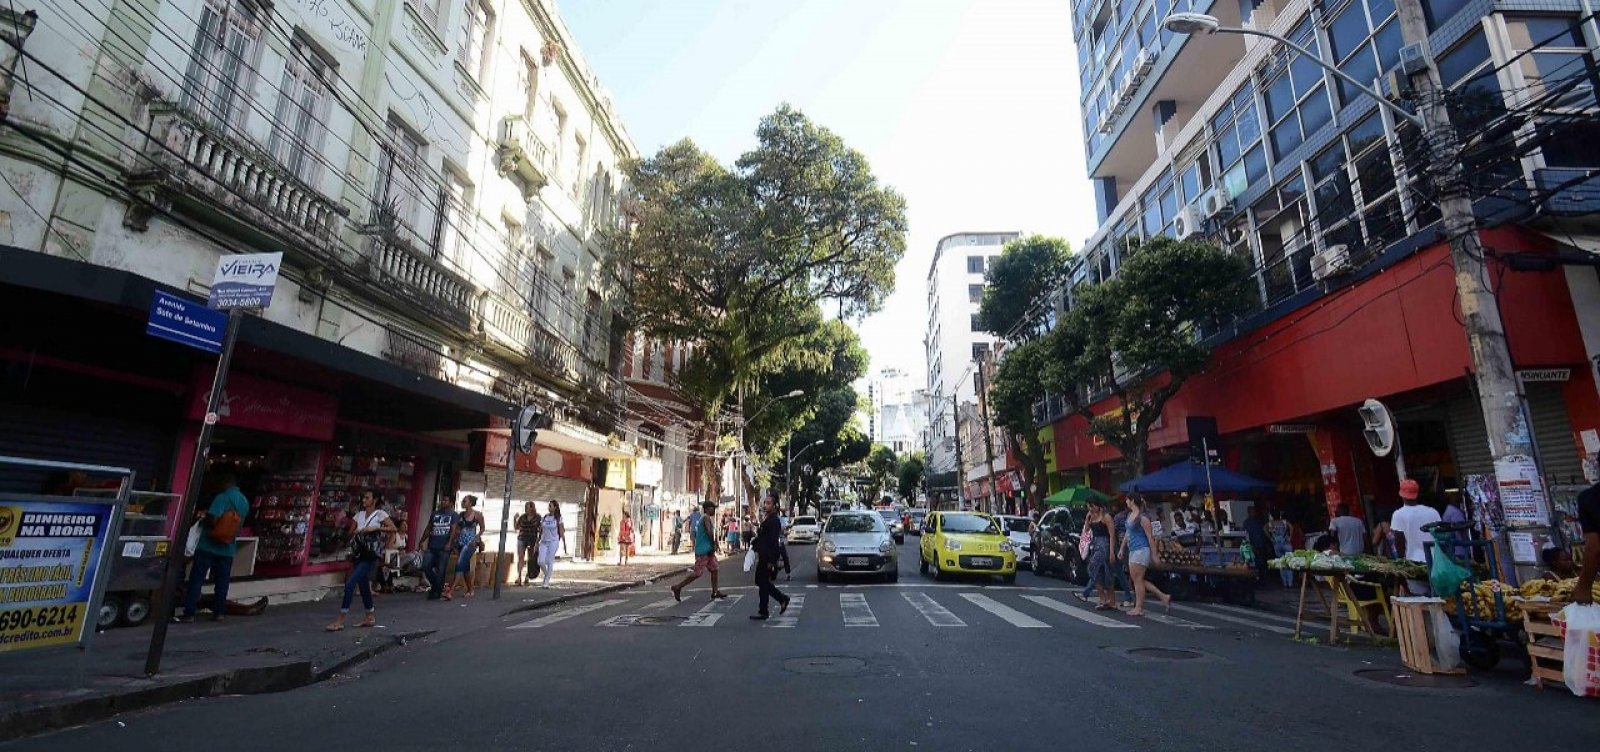 Prefeitura de Salvador vai perdoar comerciantes inadimplentes durante pandemia